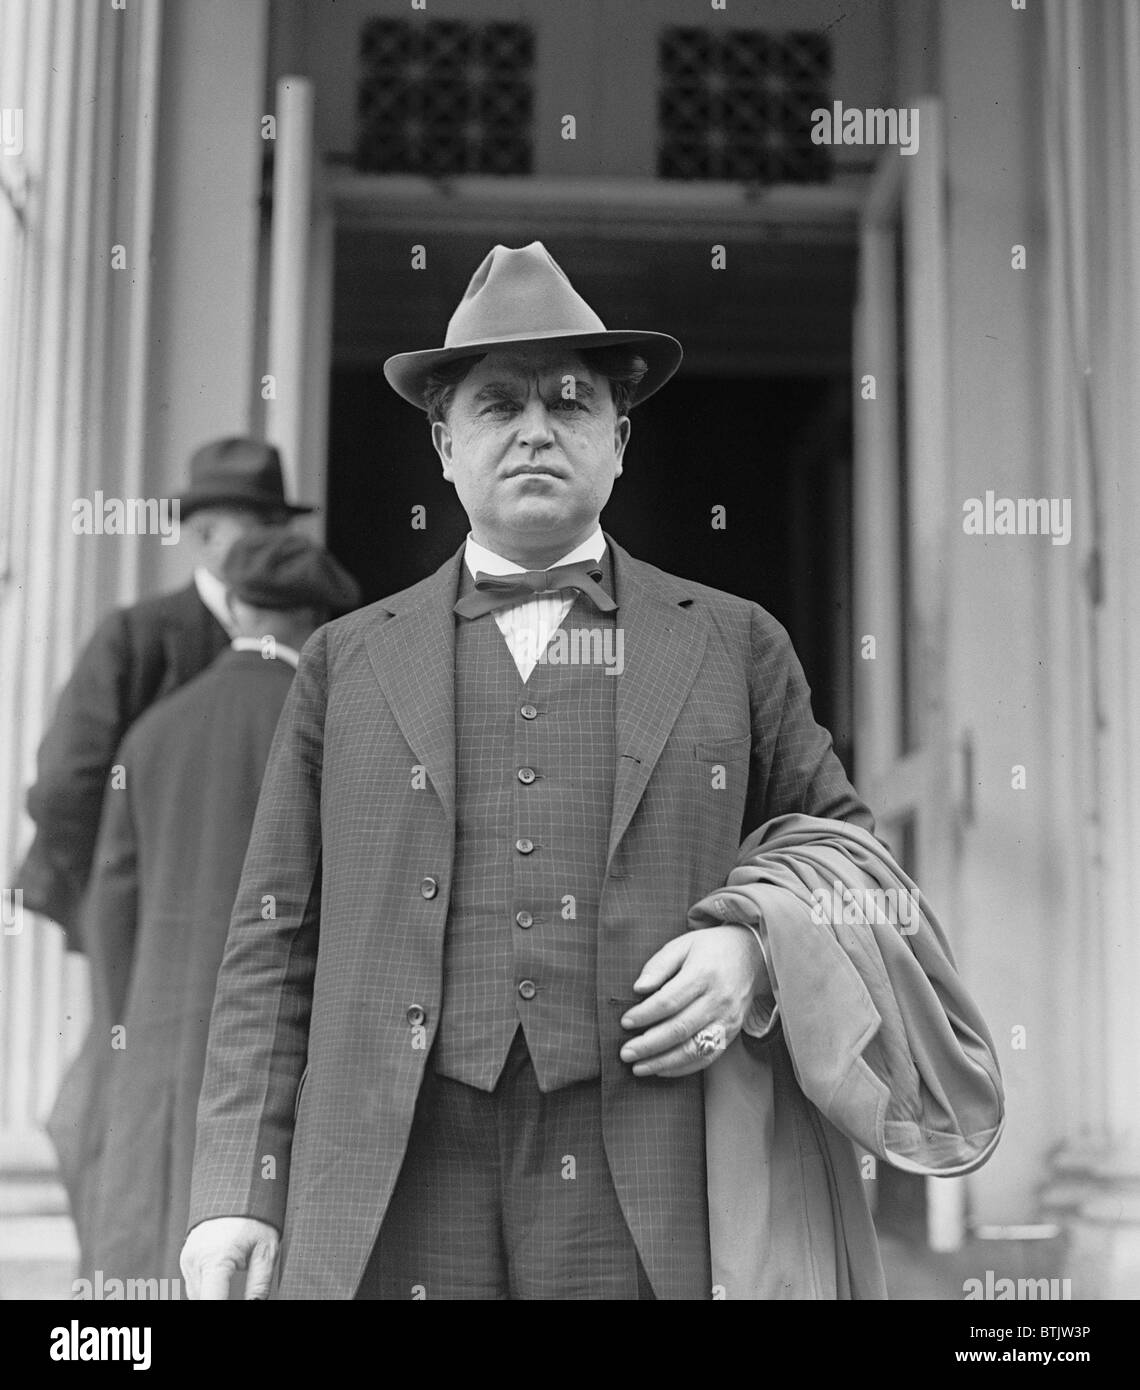 Labor Union leader, John L. Lewis (1880-1969), in Washington, D.C. in 1922. Stock Photo